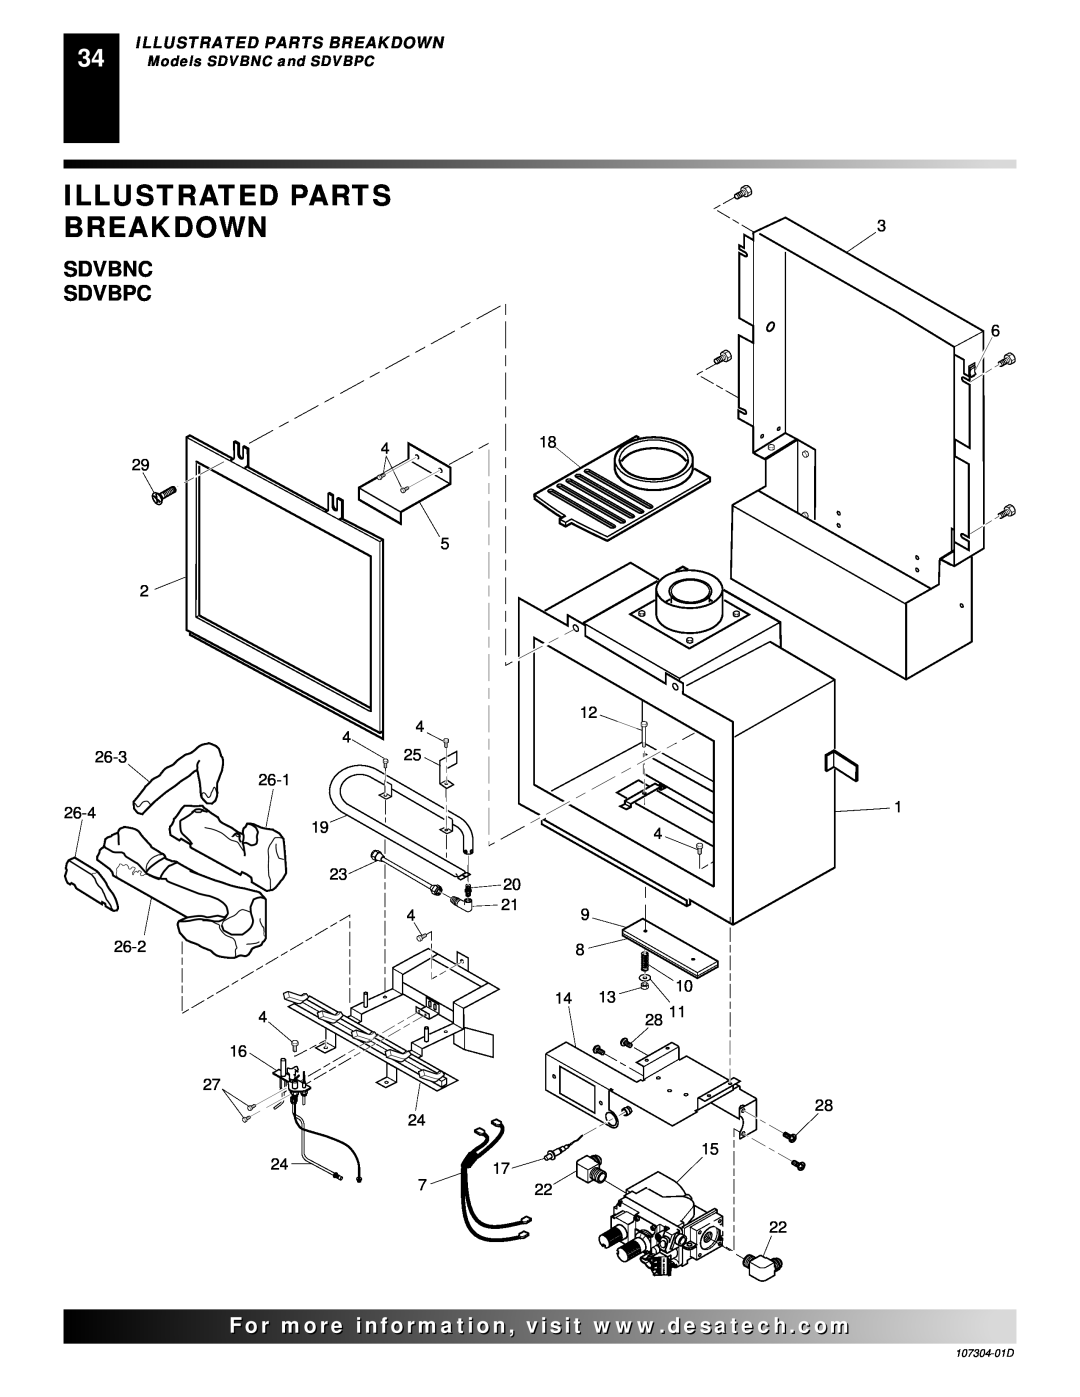 Desa SDVBPC, SDVBNC installation manual Illustrated Parts Breakdown, Sdvbnc Sdvbpc 